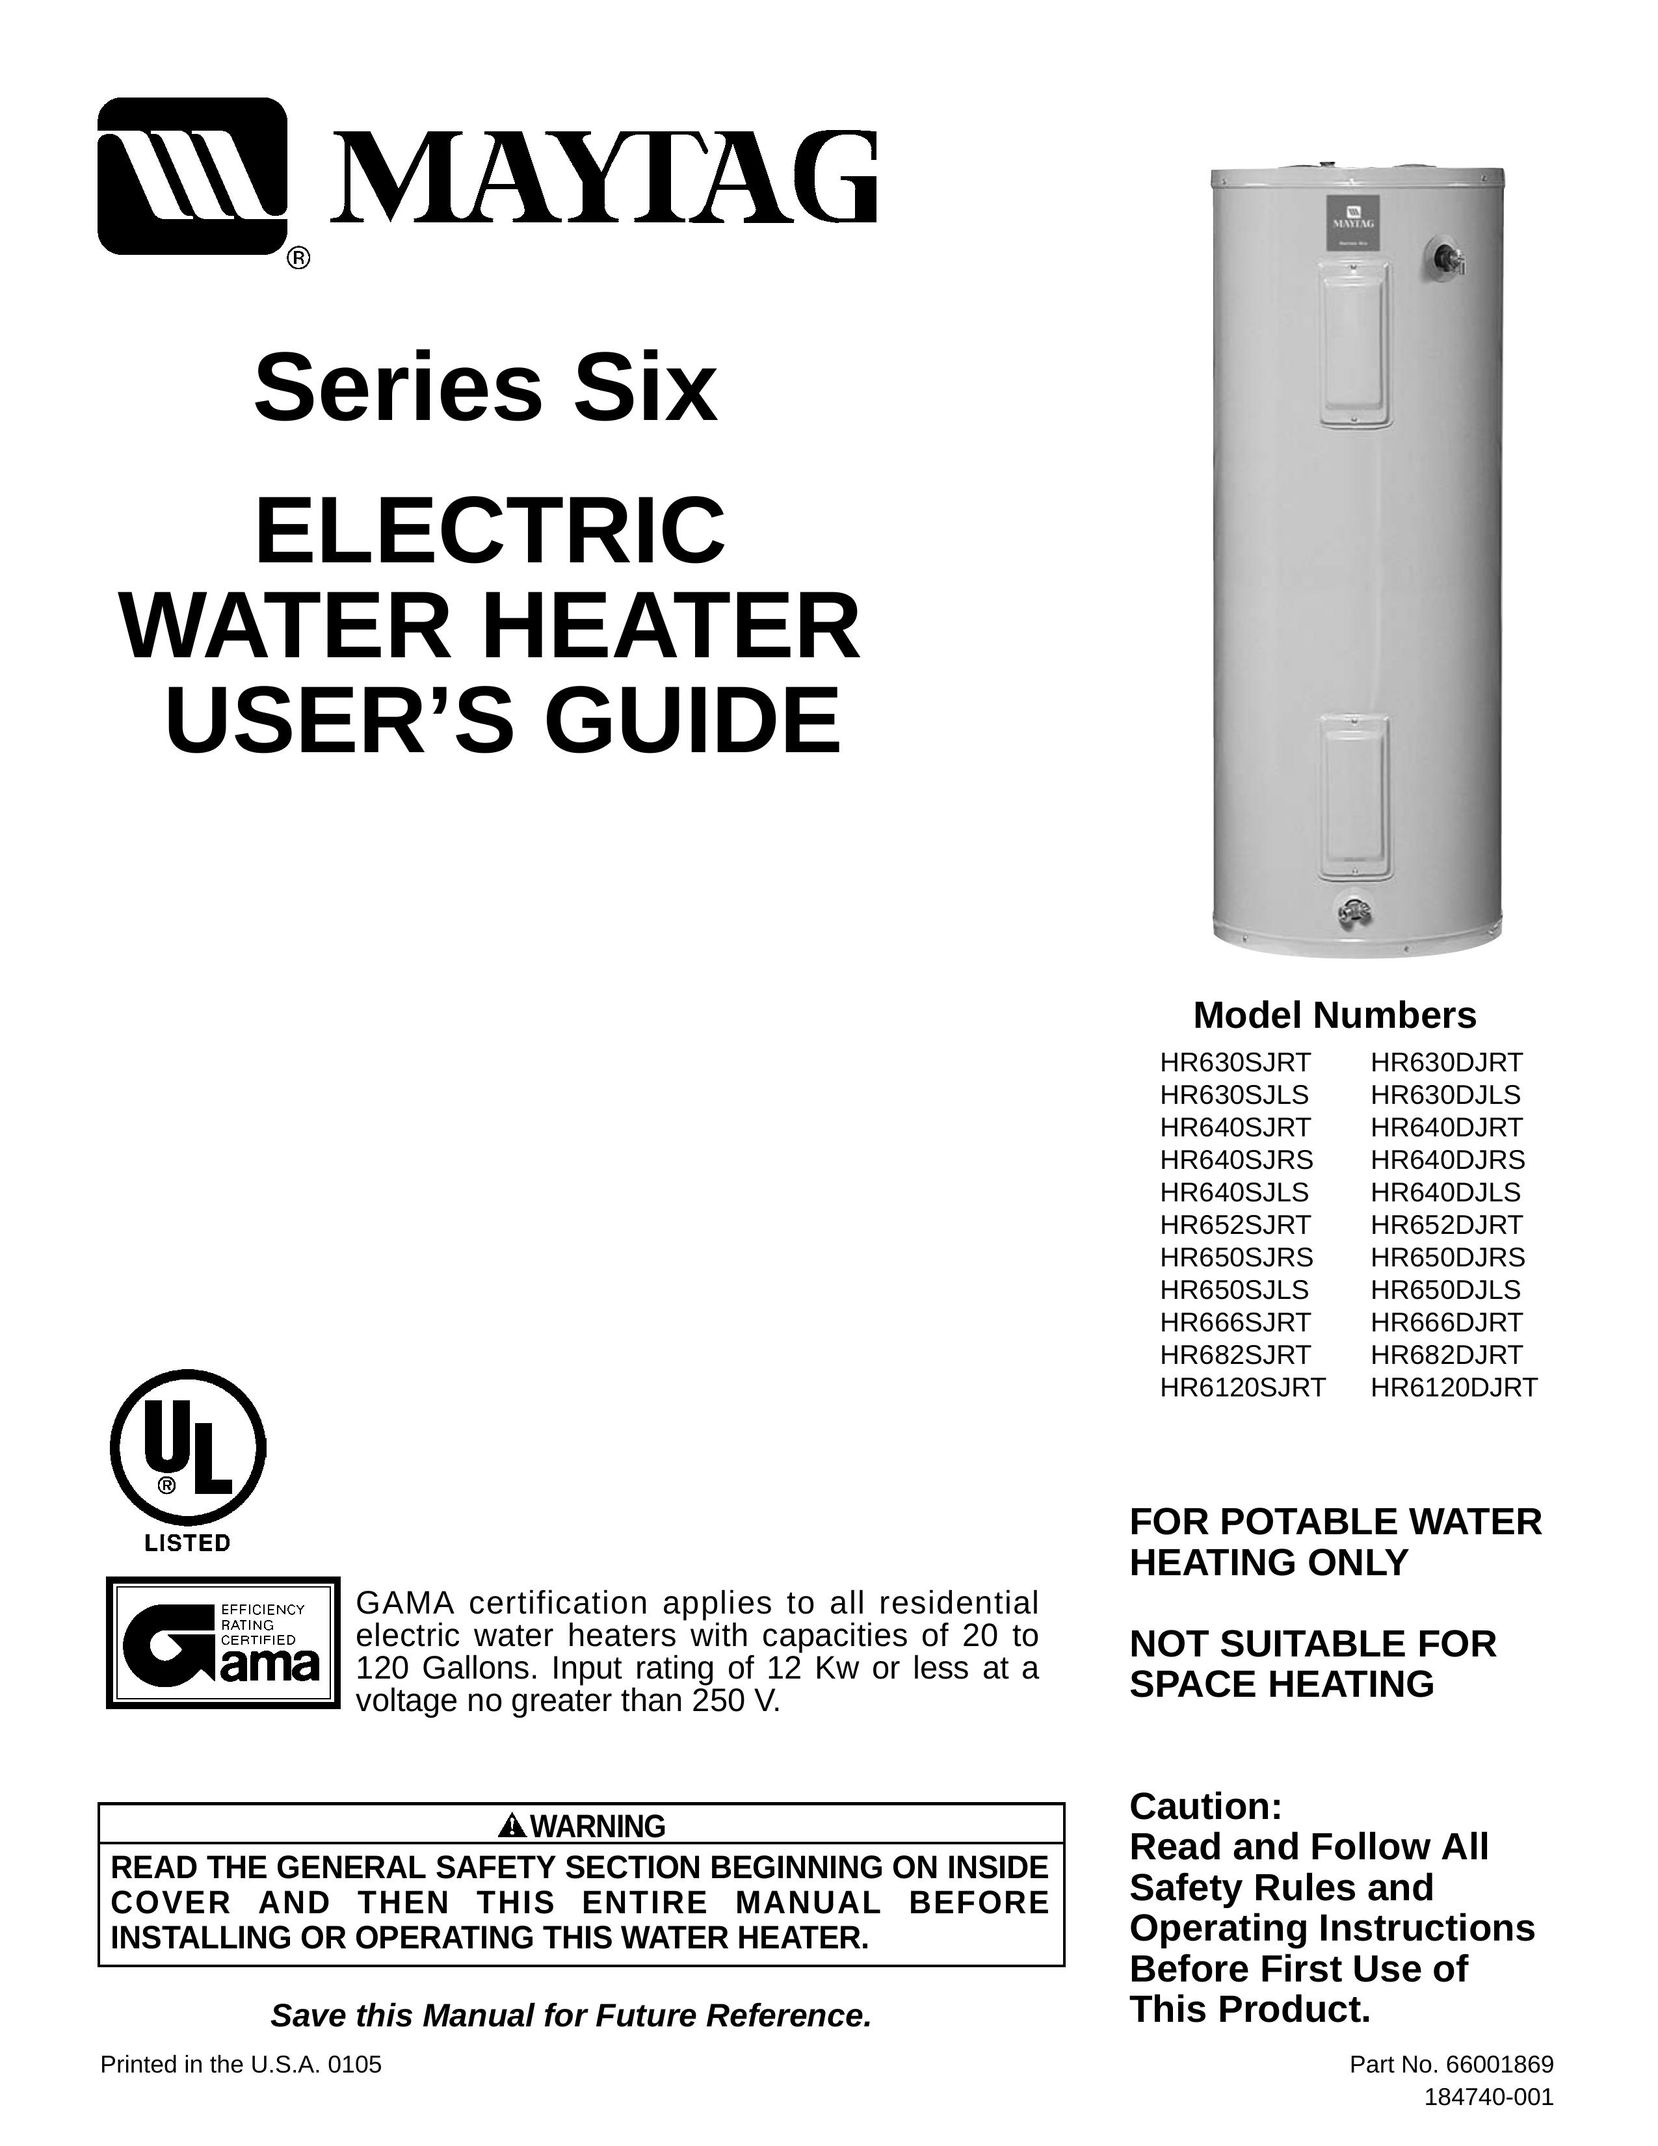 Maytag HR682DJRT Water Heater User Manual